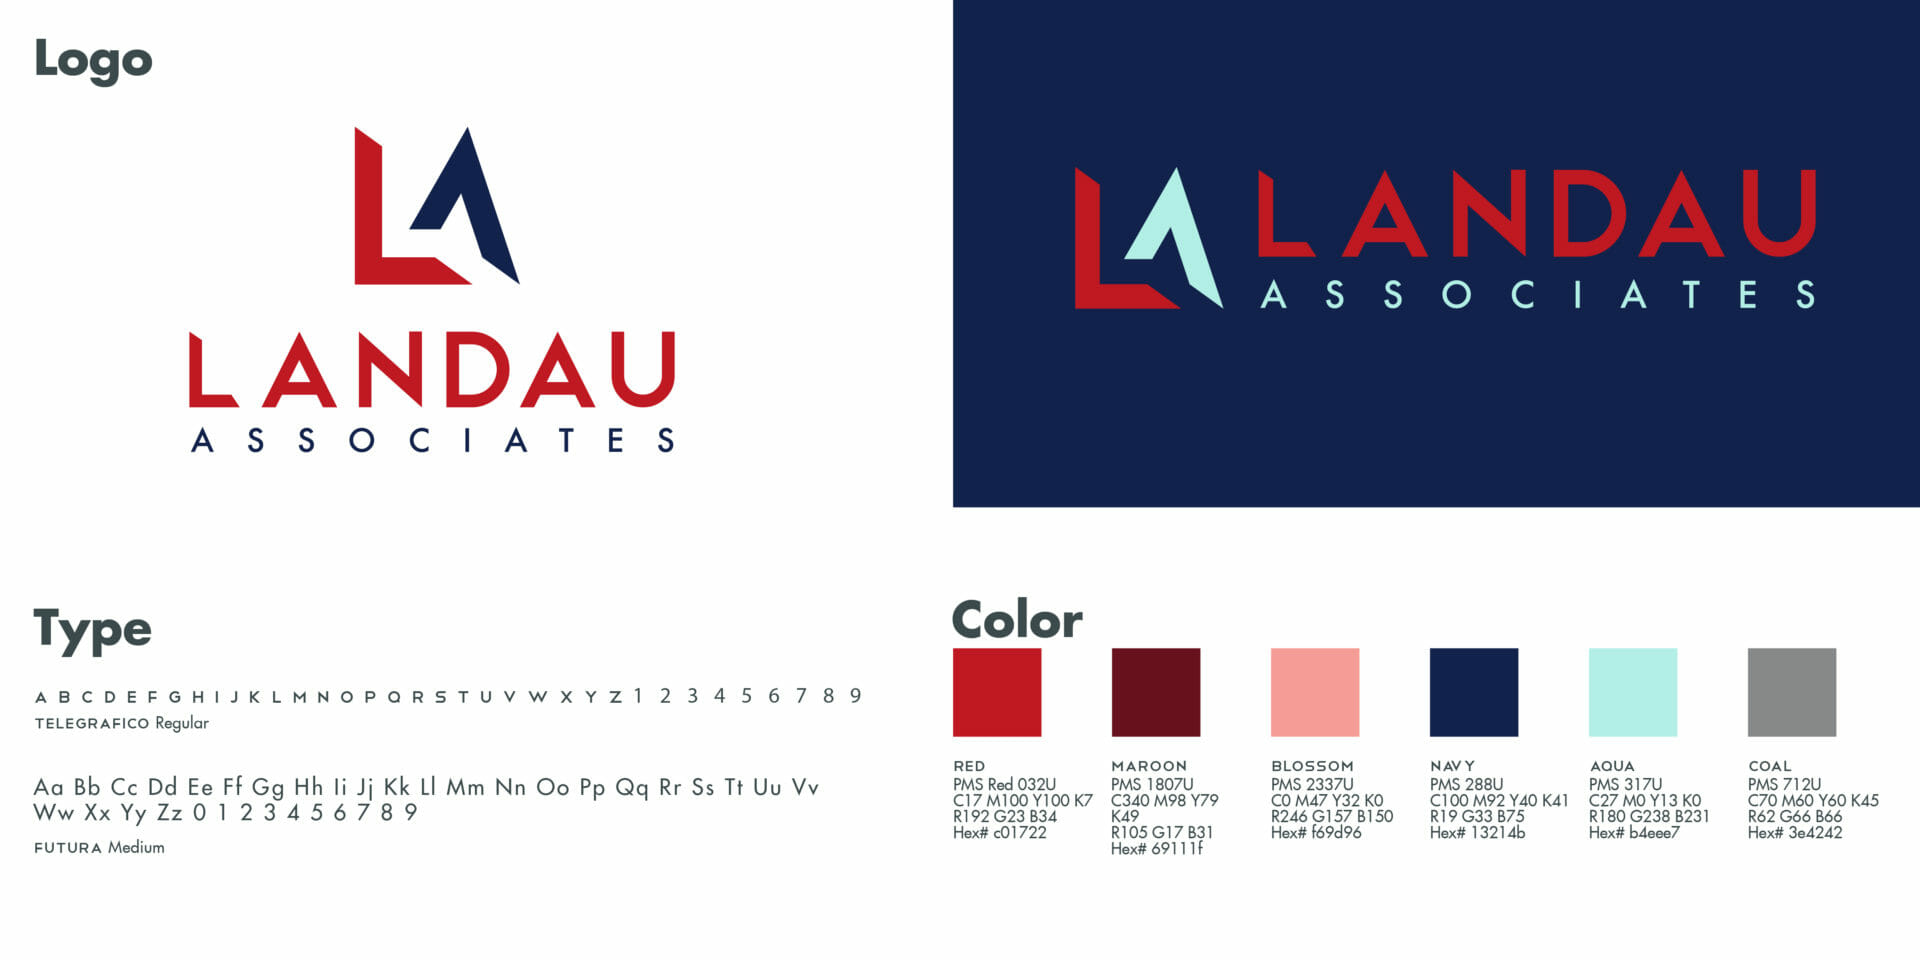 Landau Associates final logo